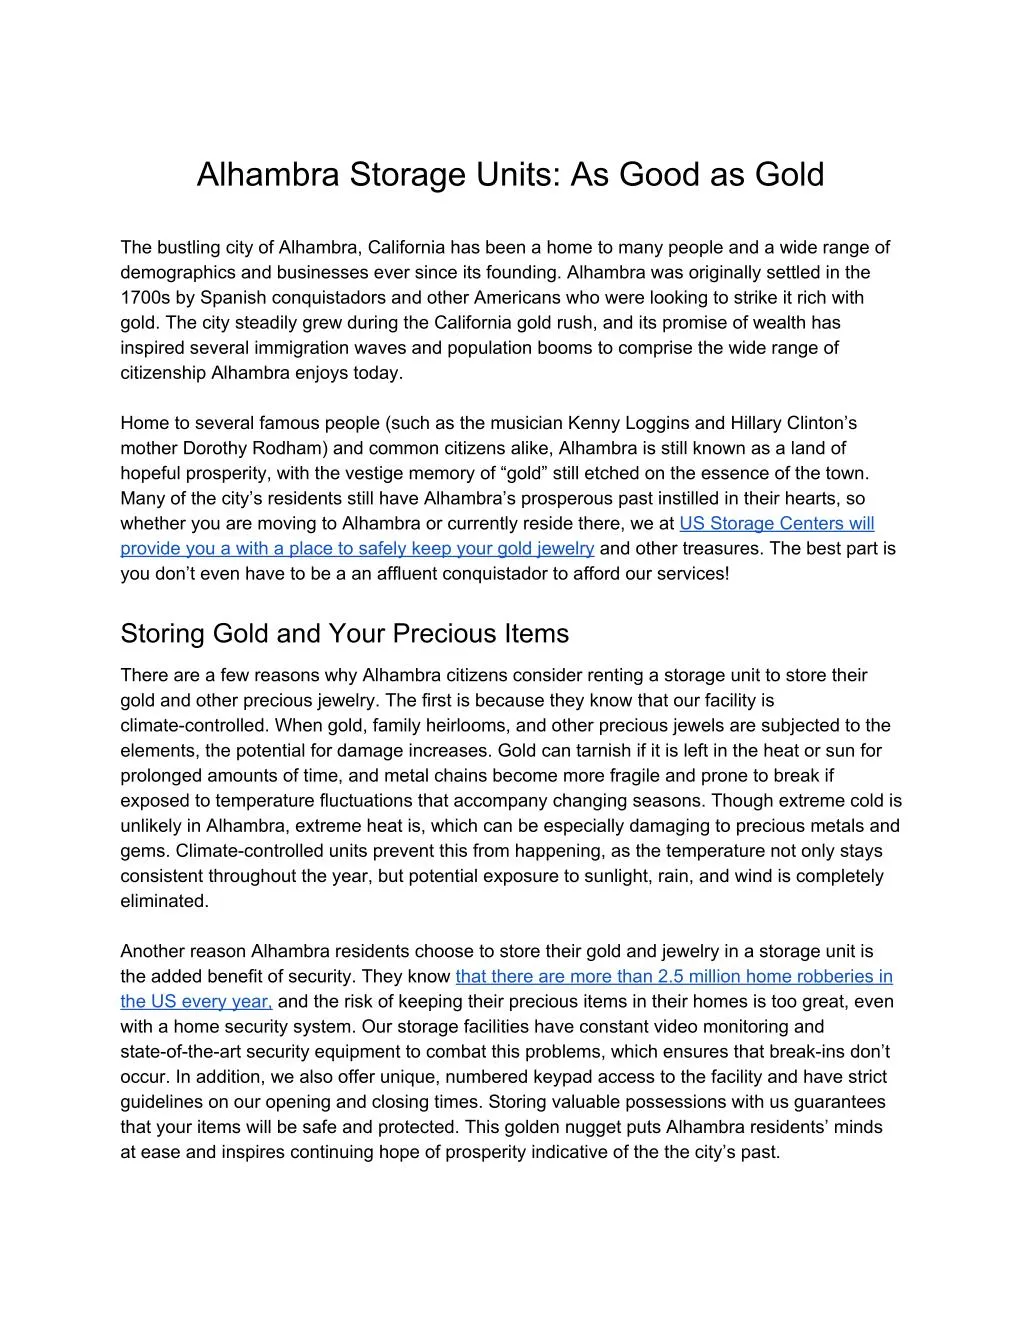 alhambra storage units as good as gold